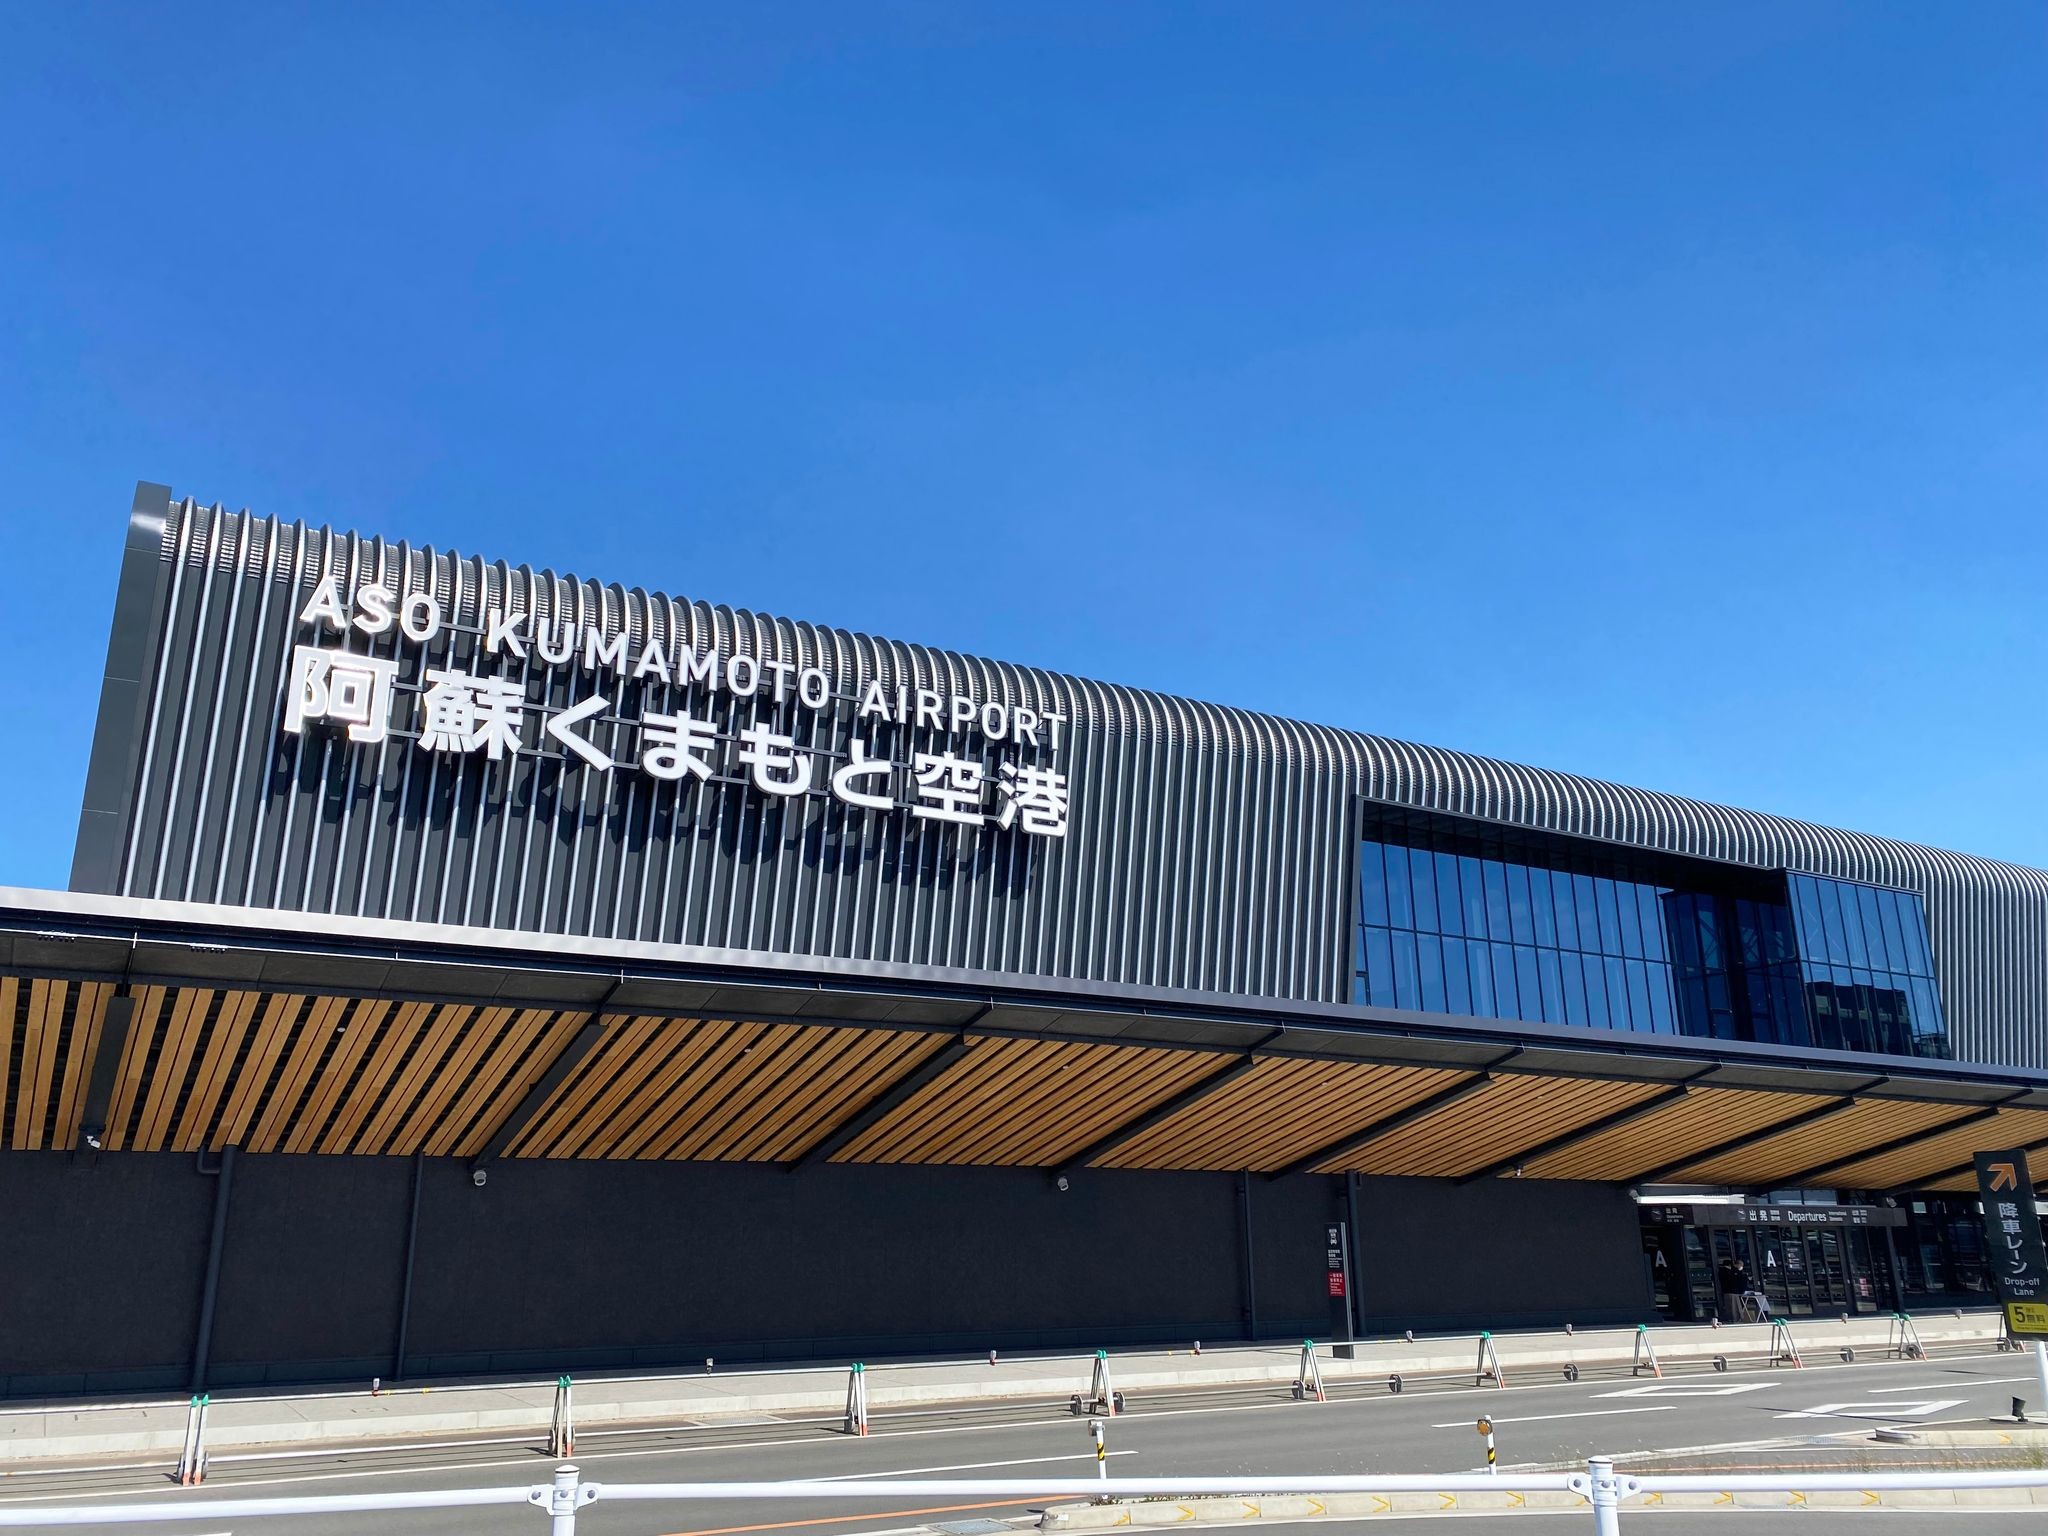 Aso Kumamoto Airport